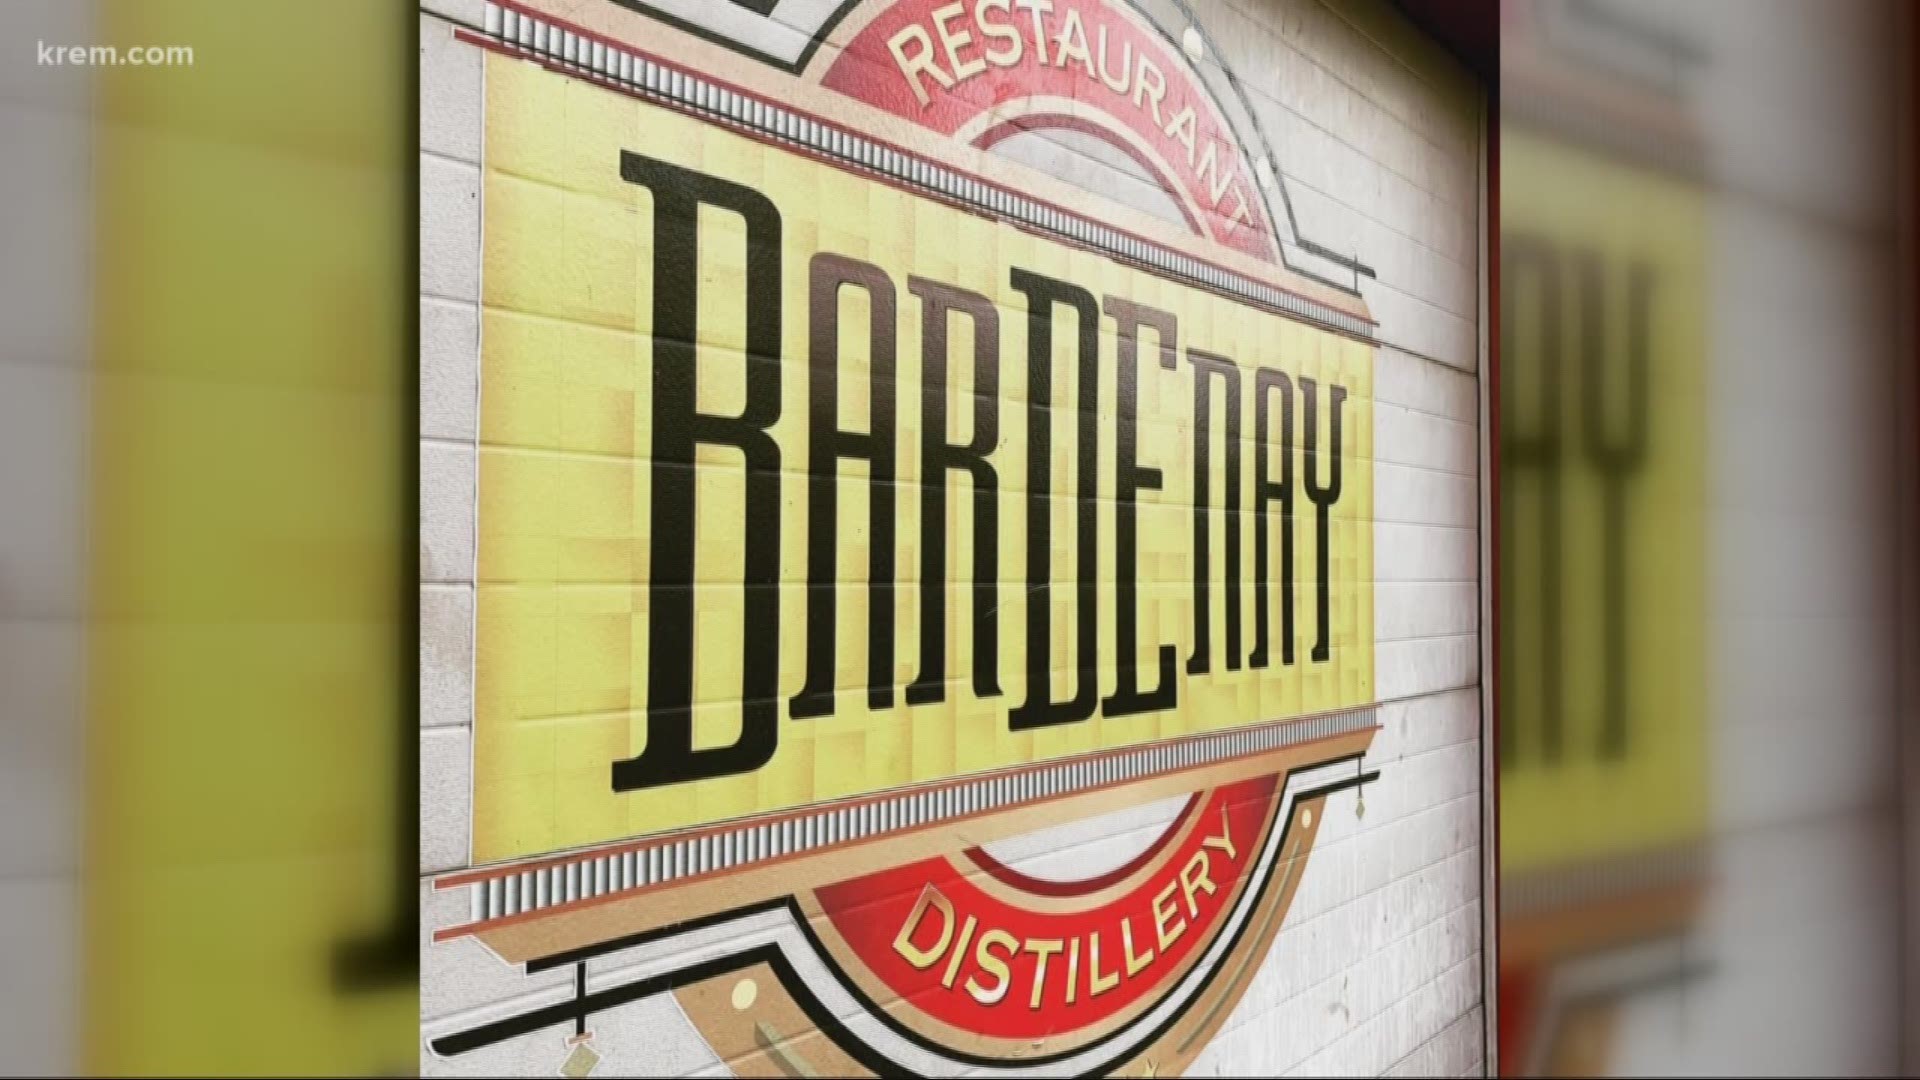 Bardenay Restaurant and Distillery said it closed the Coeur d'Alene location in an abundance of caution.